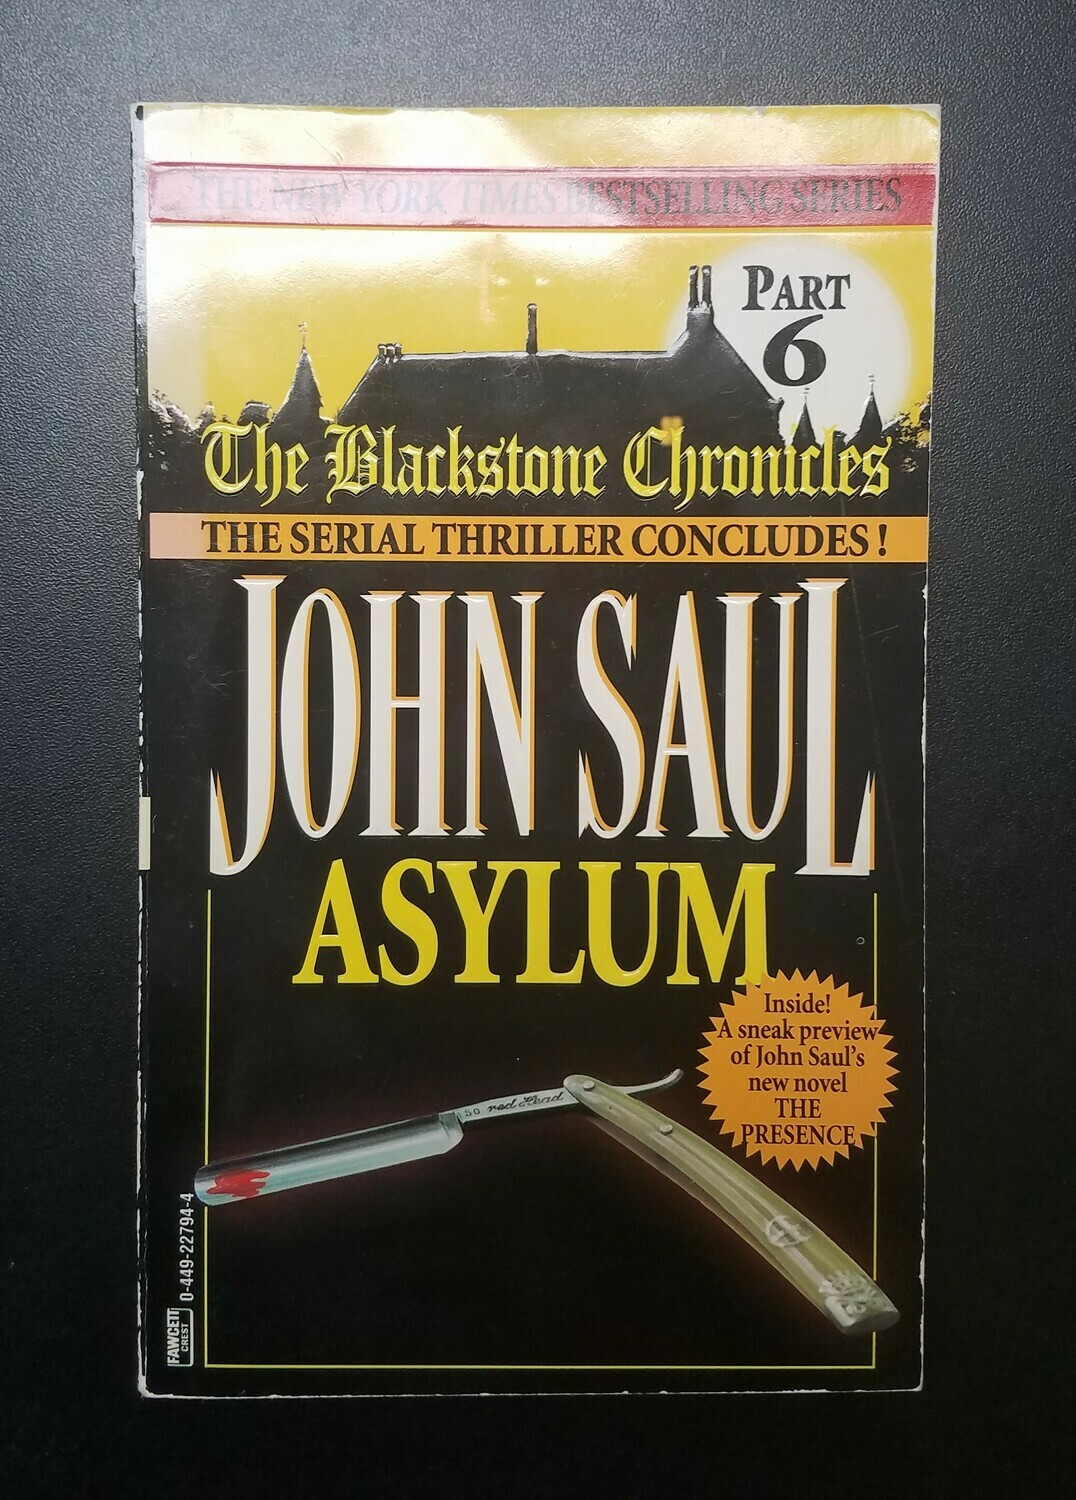 The Blackstone Chronicles: Asylum by John Saul